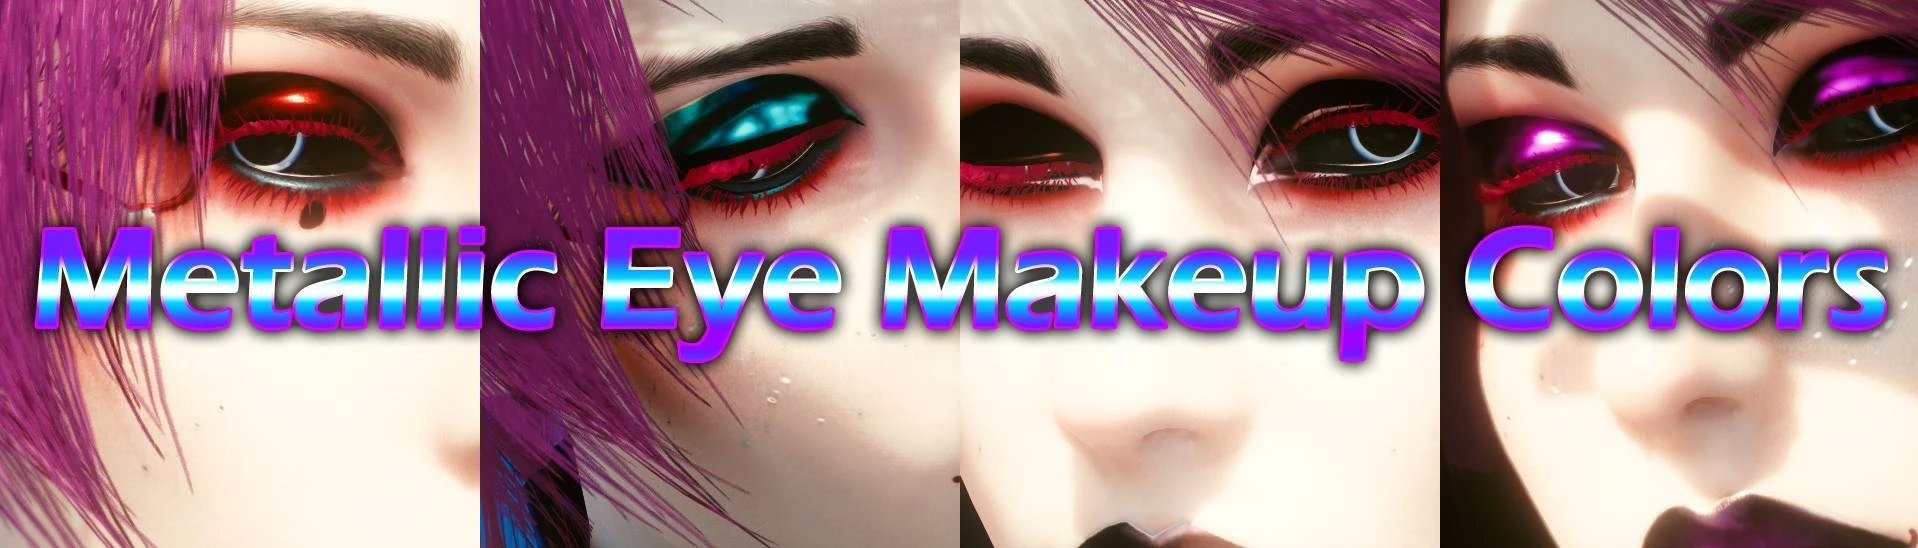 Metallic Eye Makeup Colors At Cyberpunk